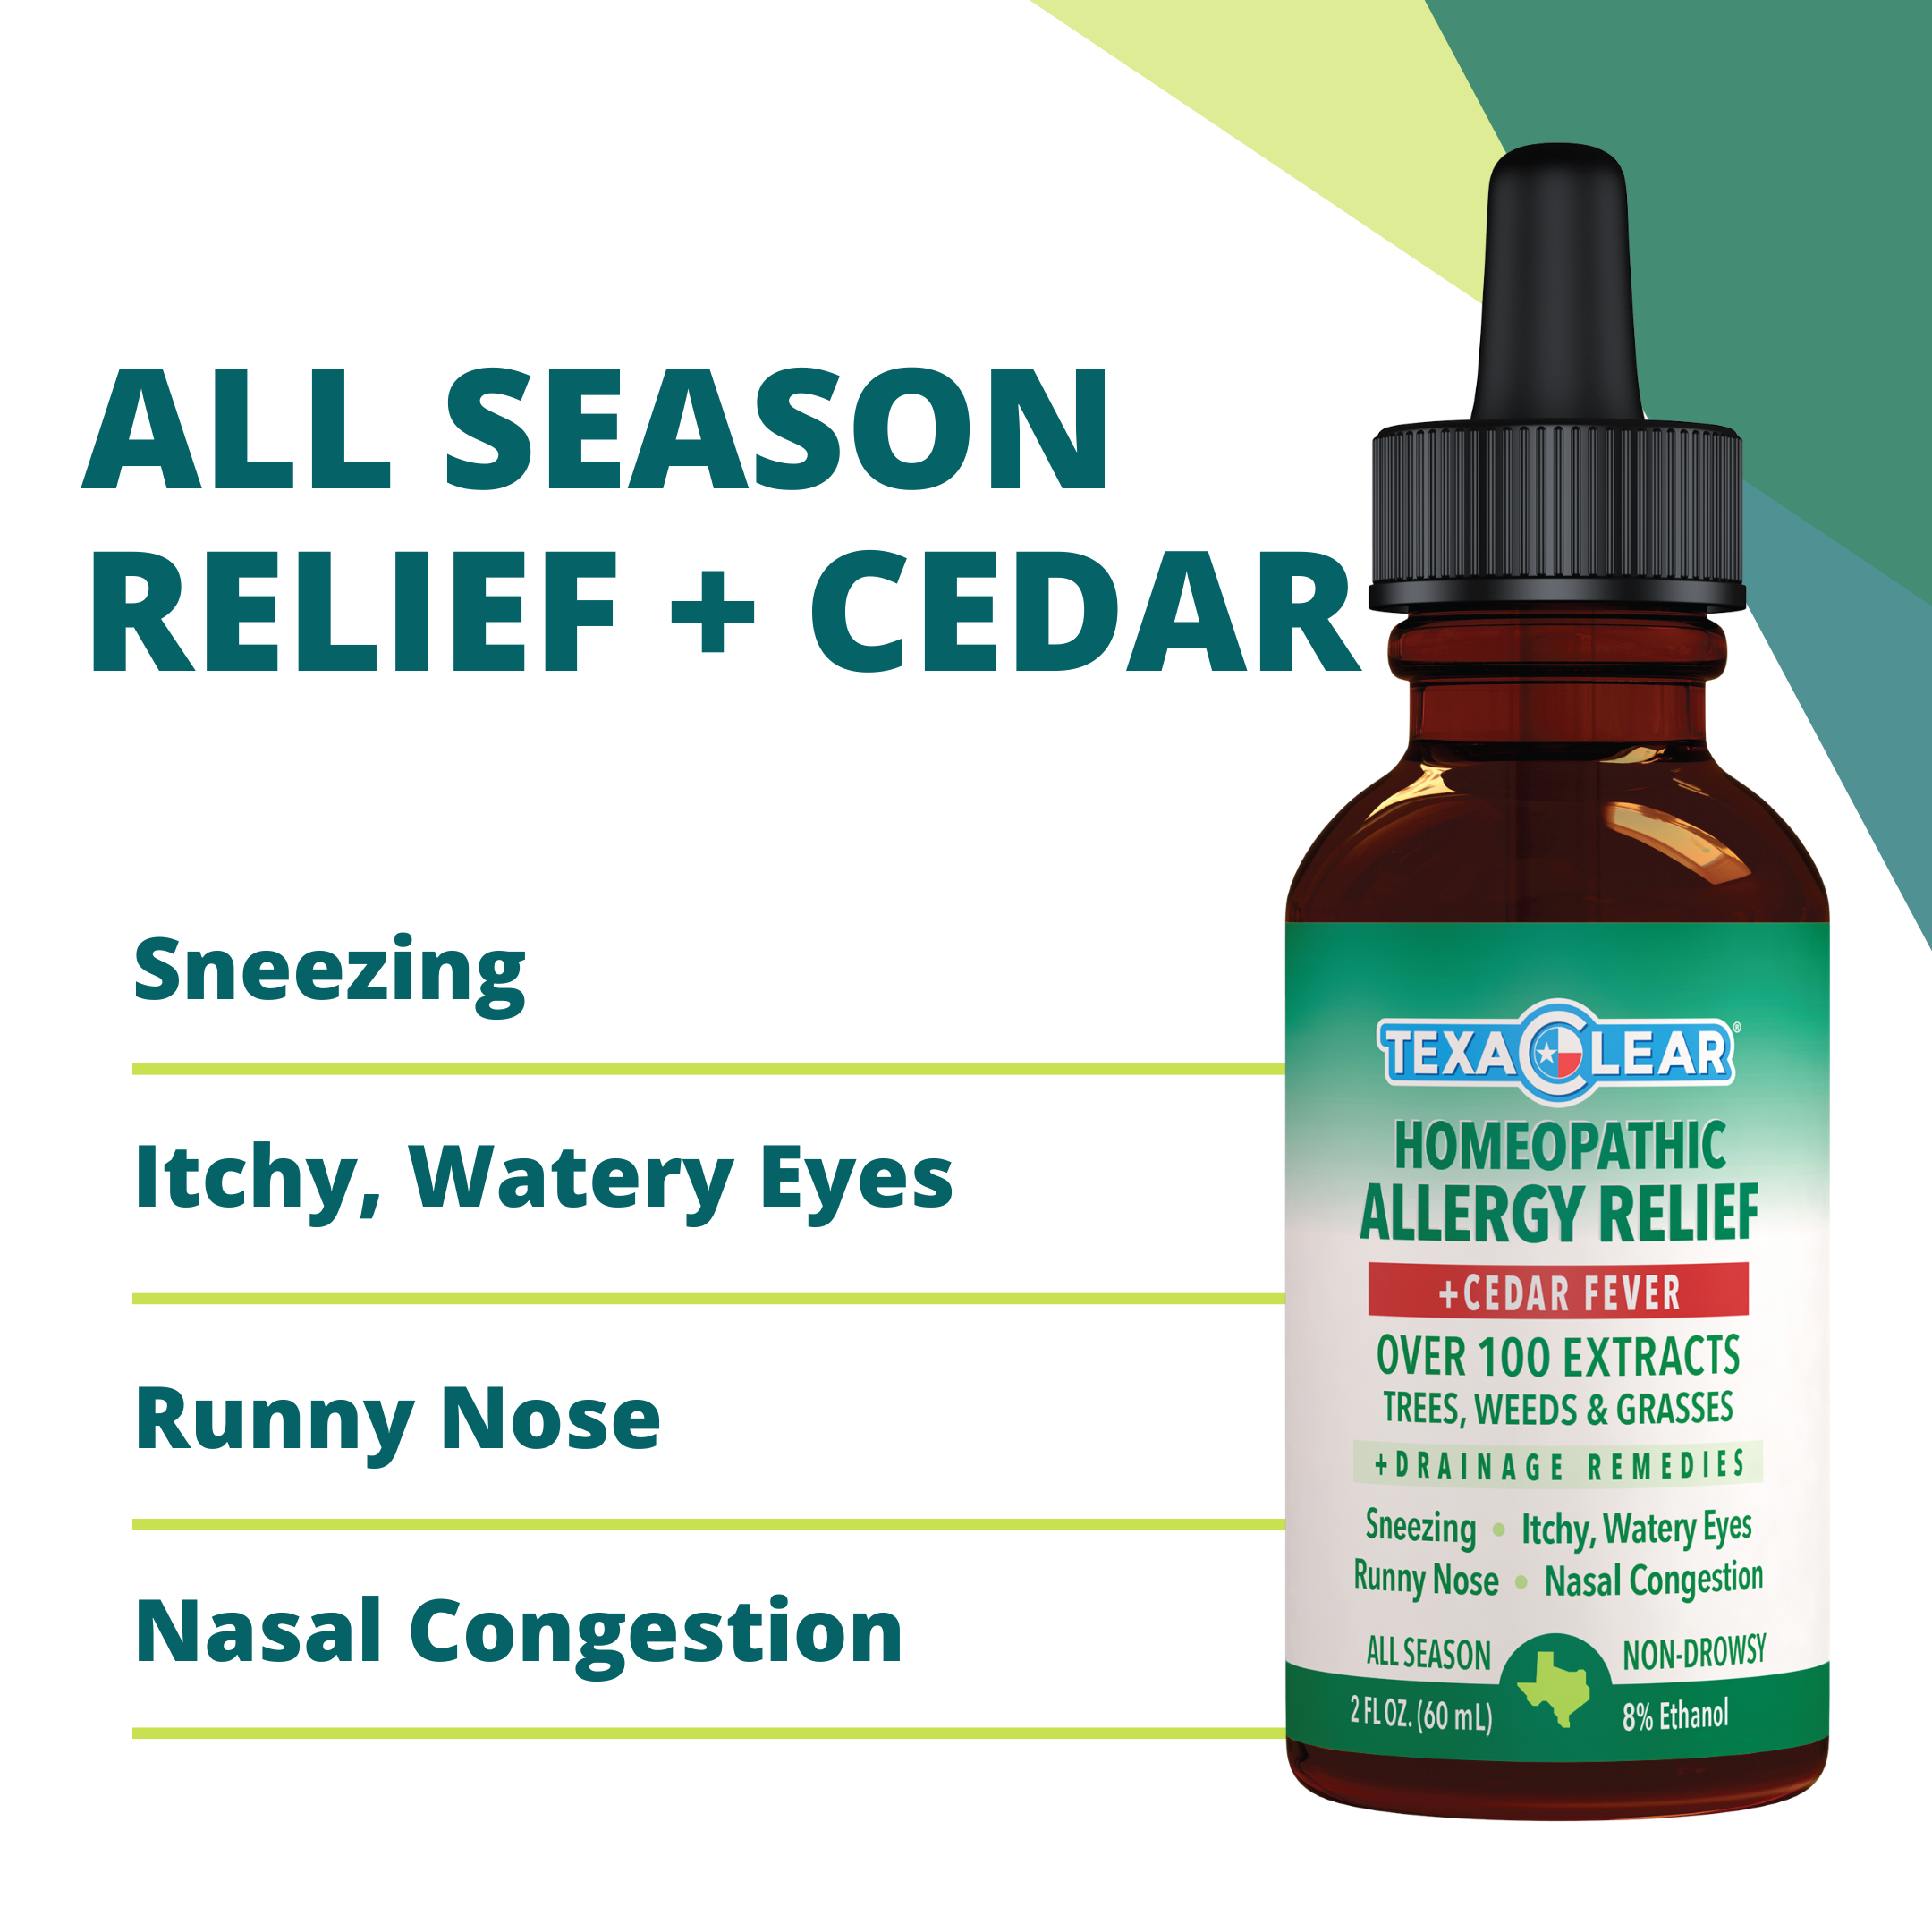 Texas cedar fever relief drops. Made for Texas allergy relief. Non-drowsy allergy relief formula. Bundle and save.